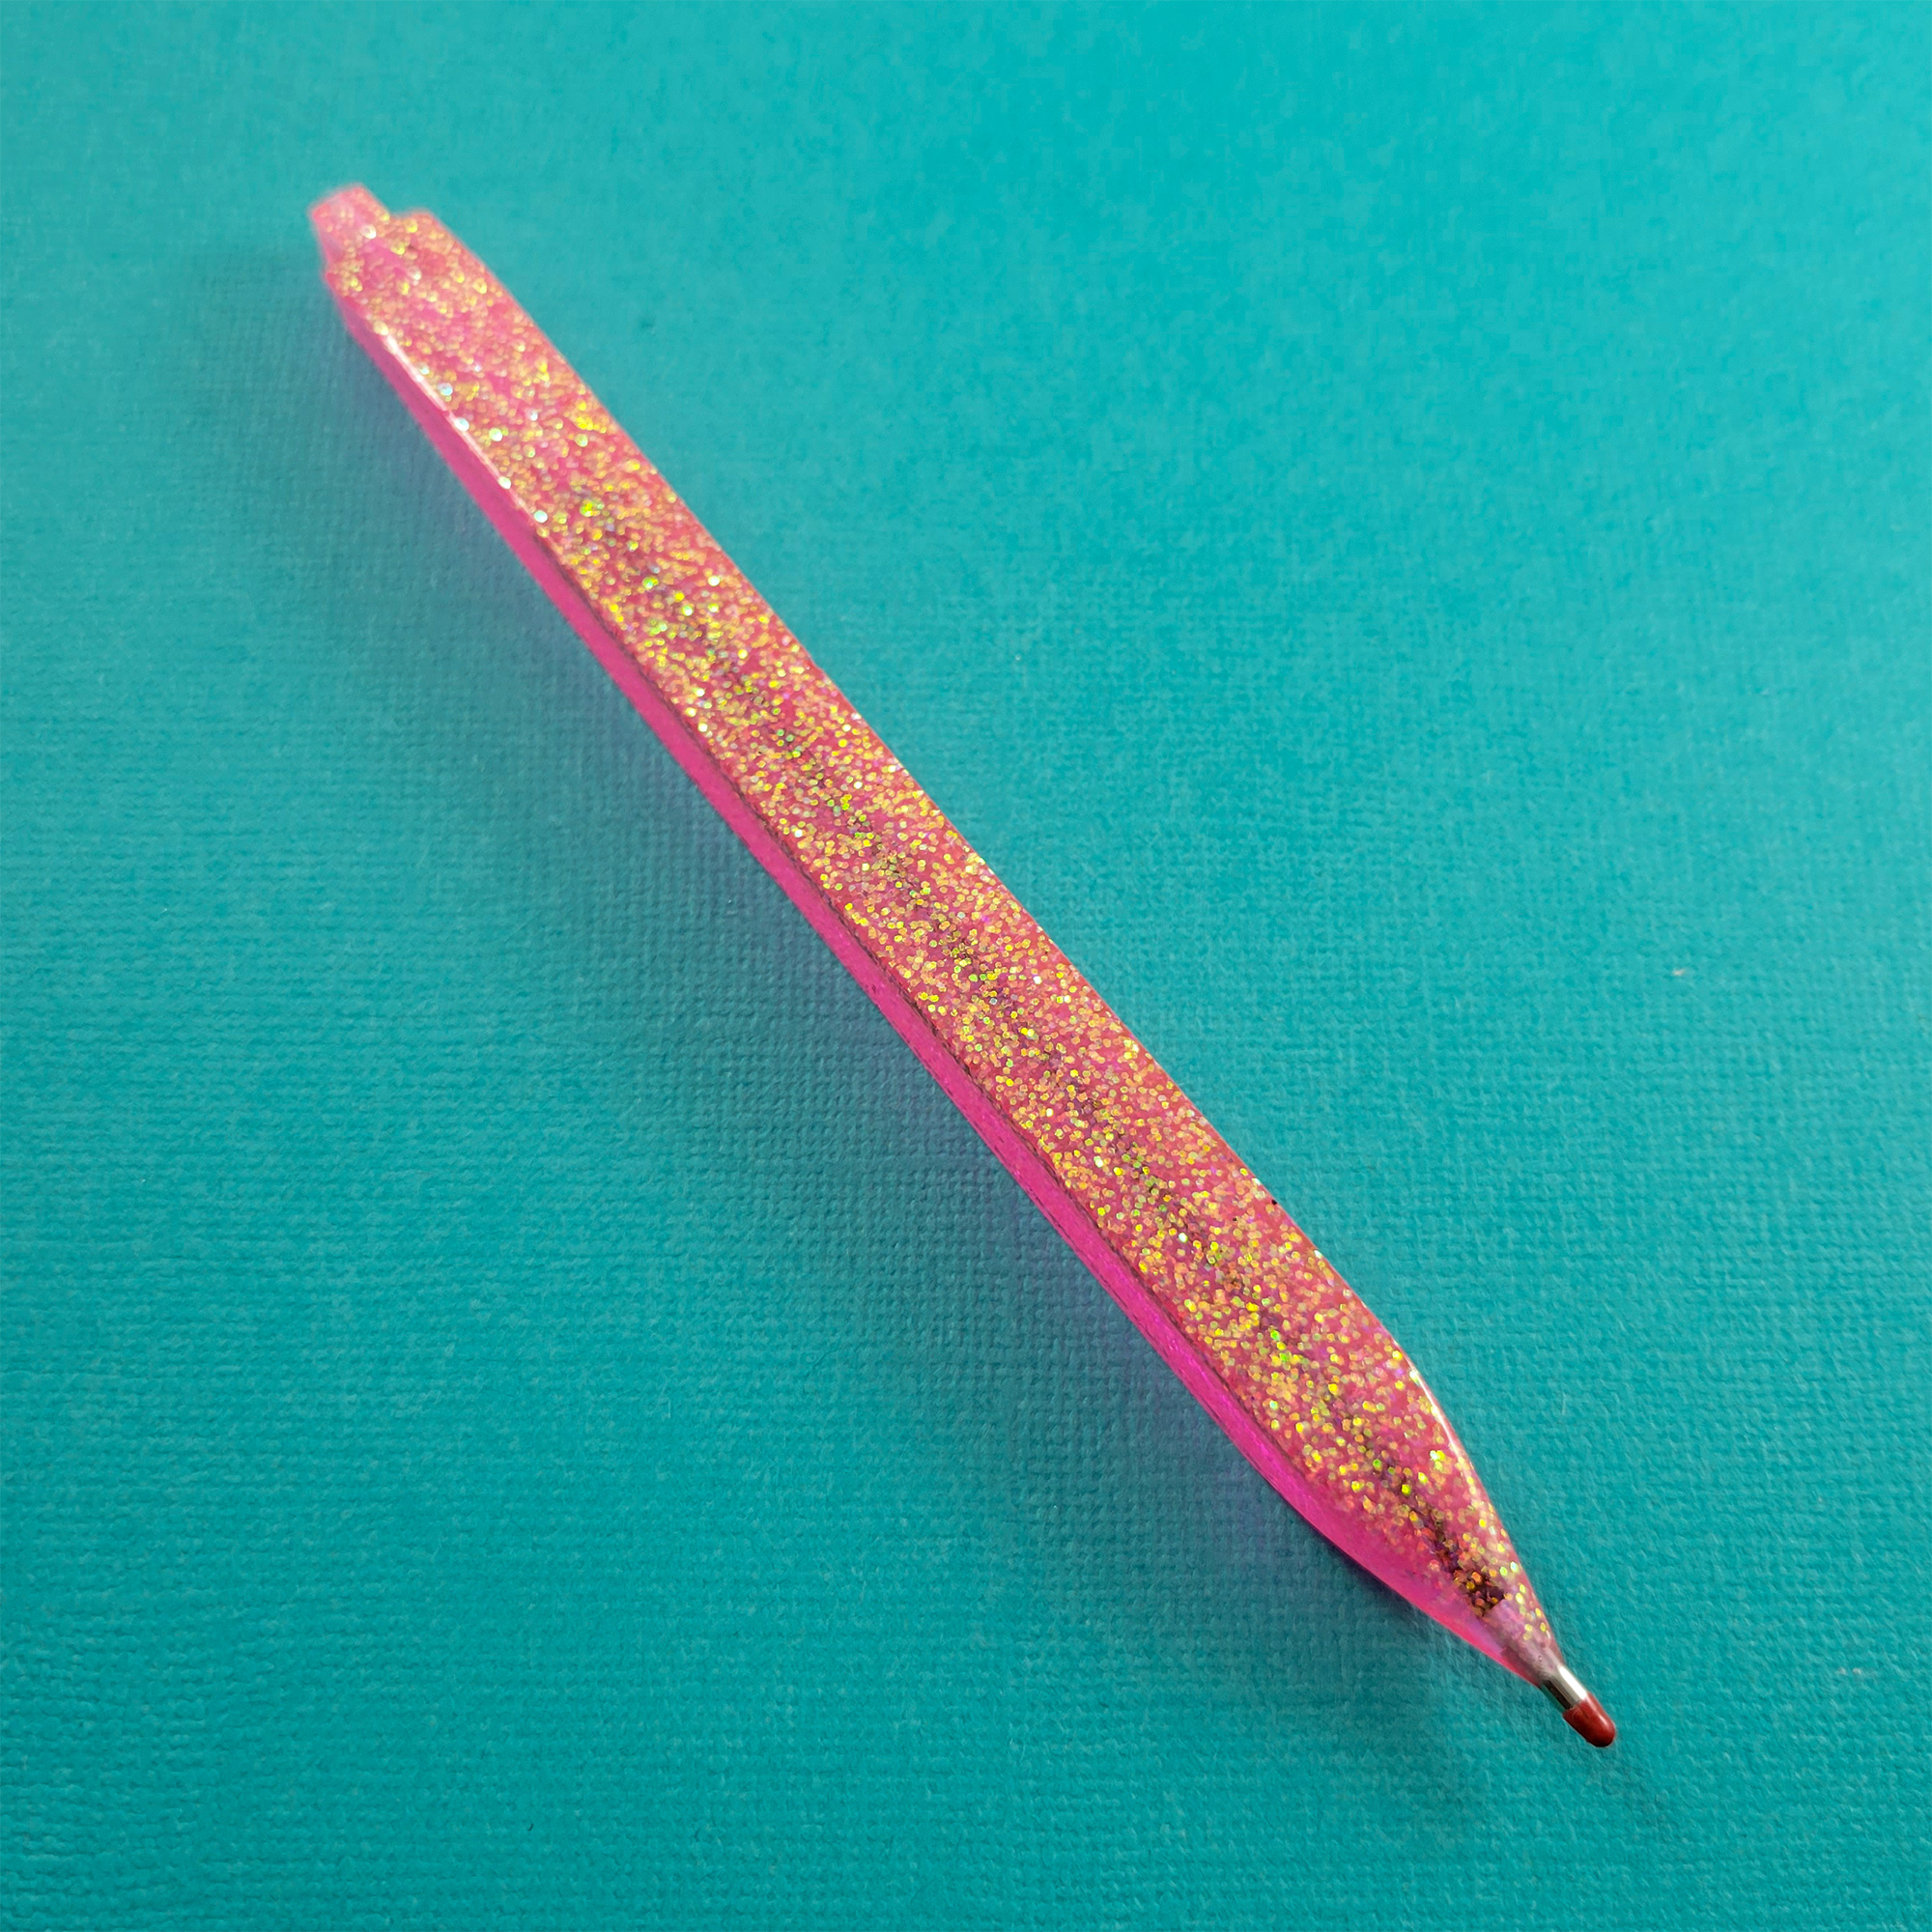 Glittery Neon Pink Handmade Ball Point Pen by Wilde Designs